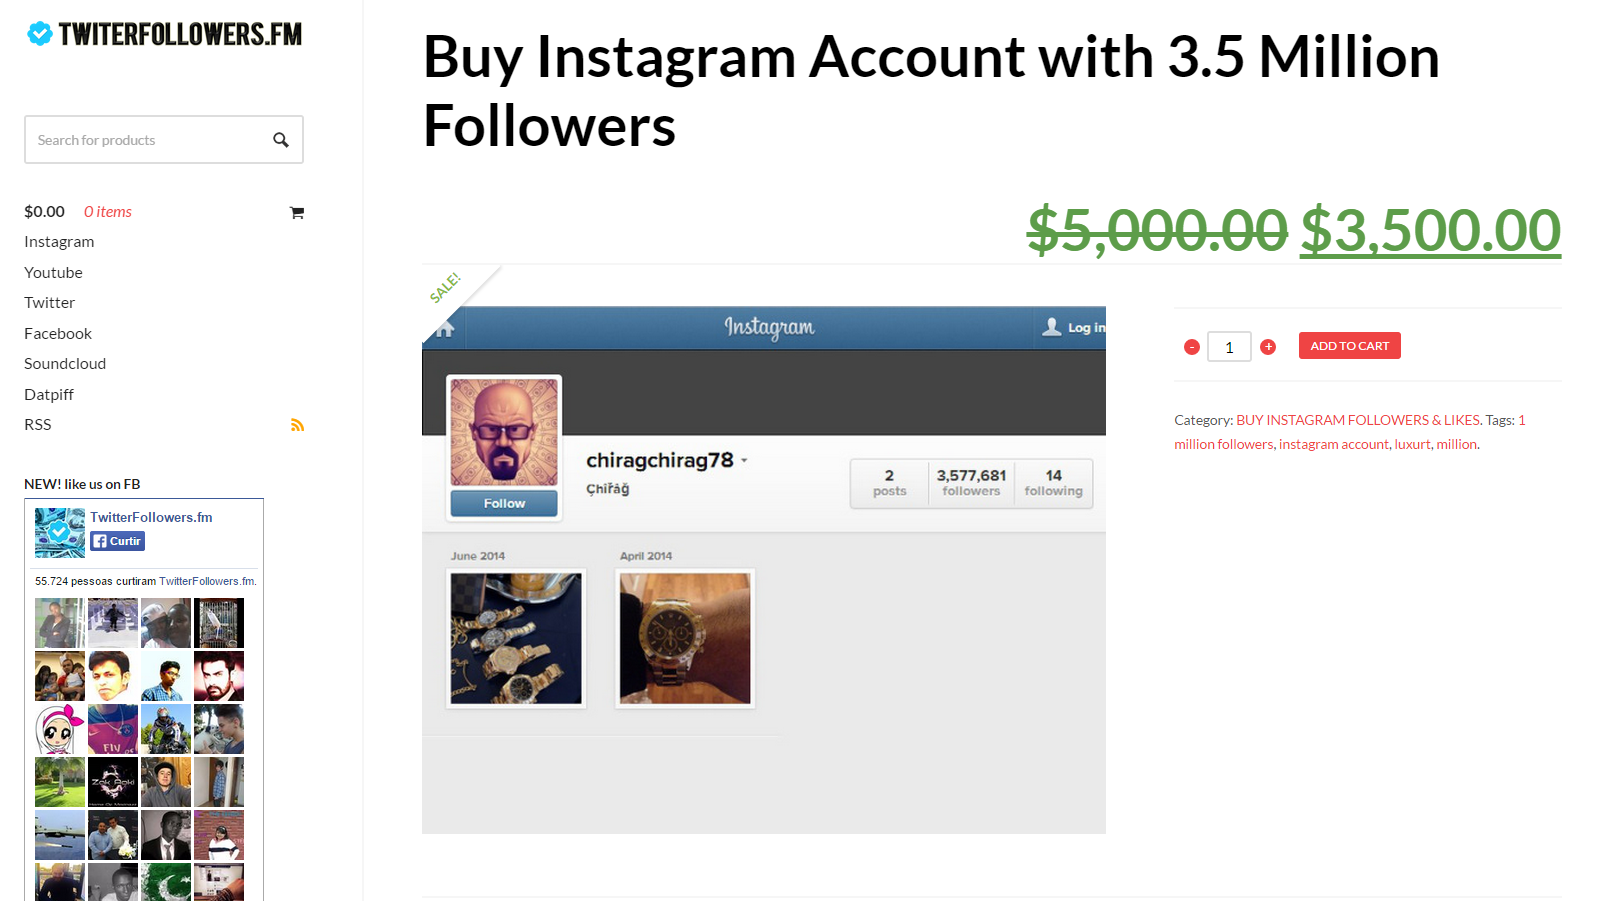 Comprar seguidores no Instagram e outras redes